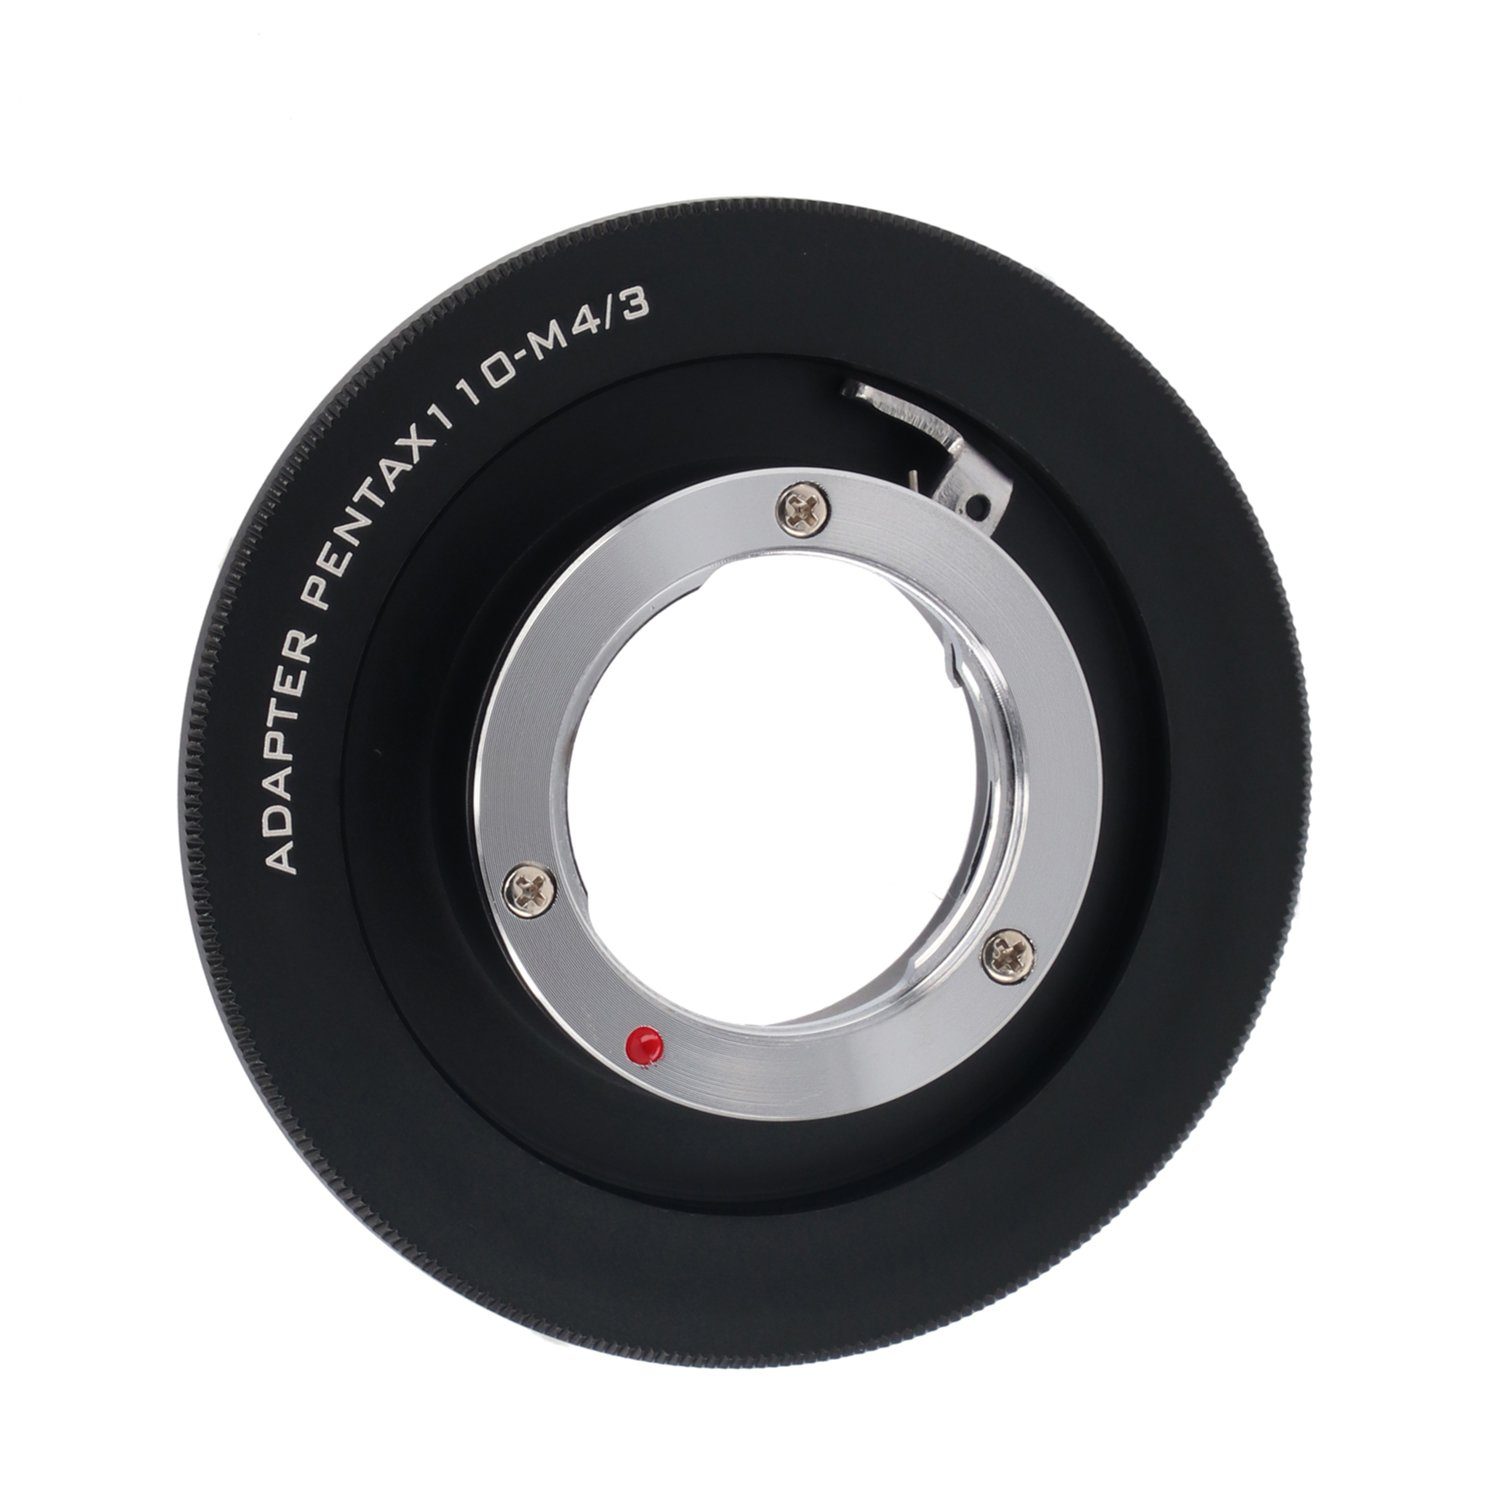 ayex Objektivadapter für Pentax 4/3 Objektive an Objektiveadapter Micro 110 Kameras